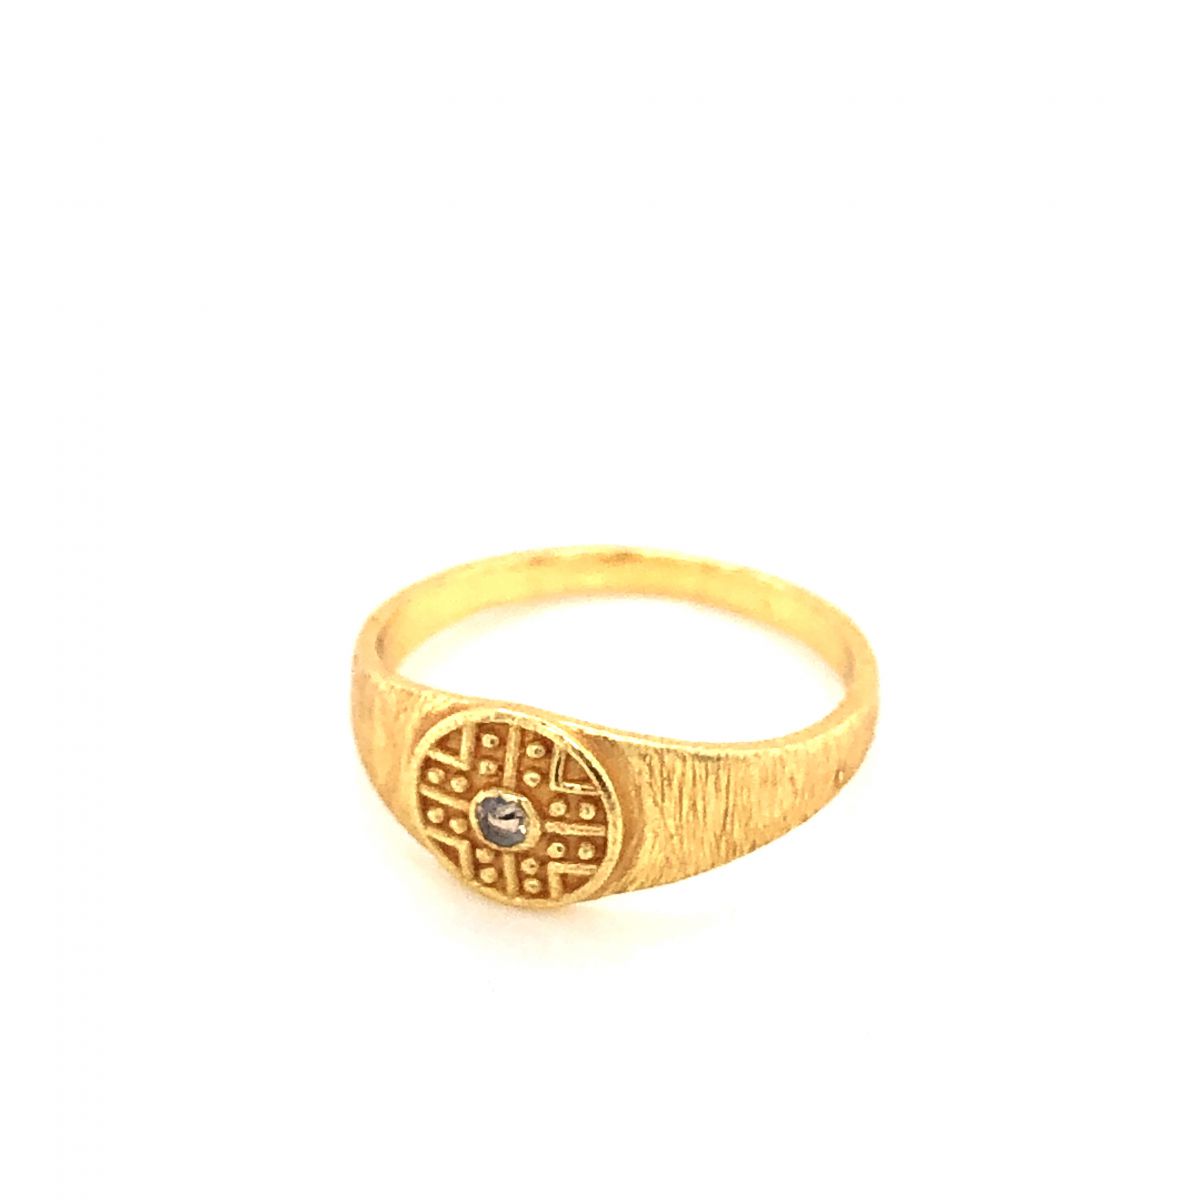 gg ring size 54 labyrinth labradorite gold plated